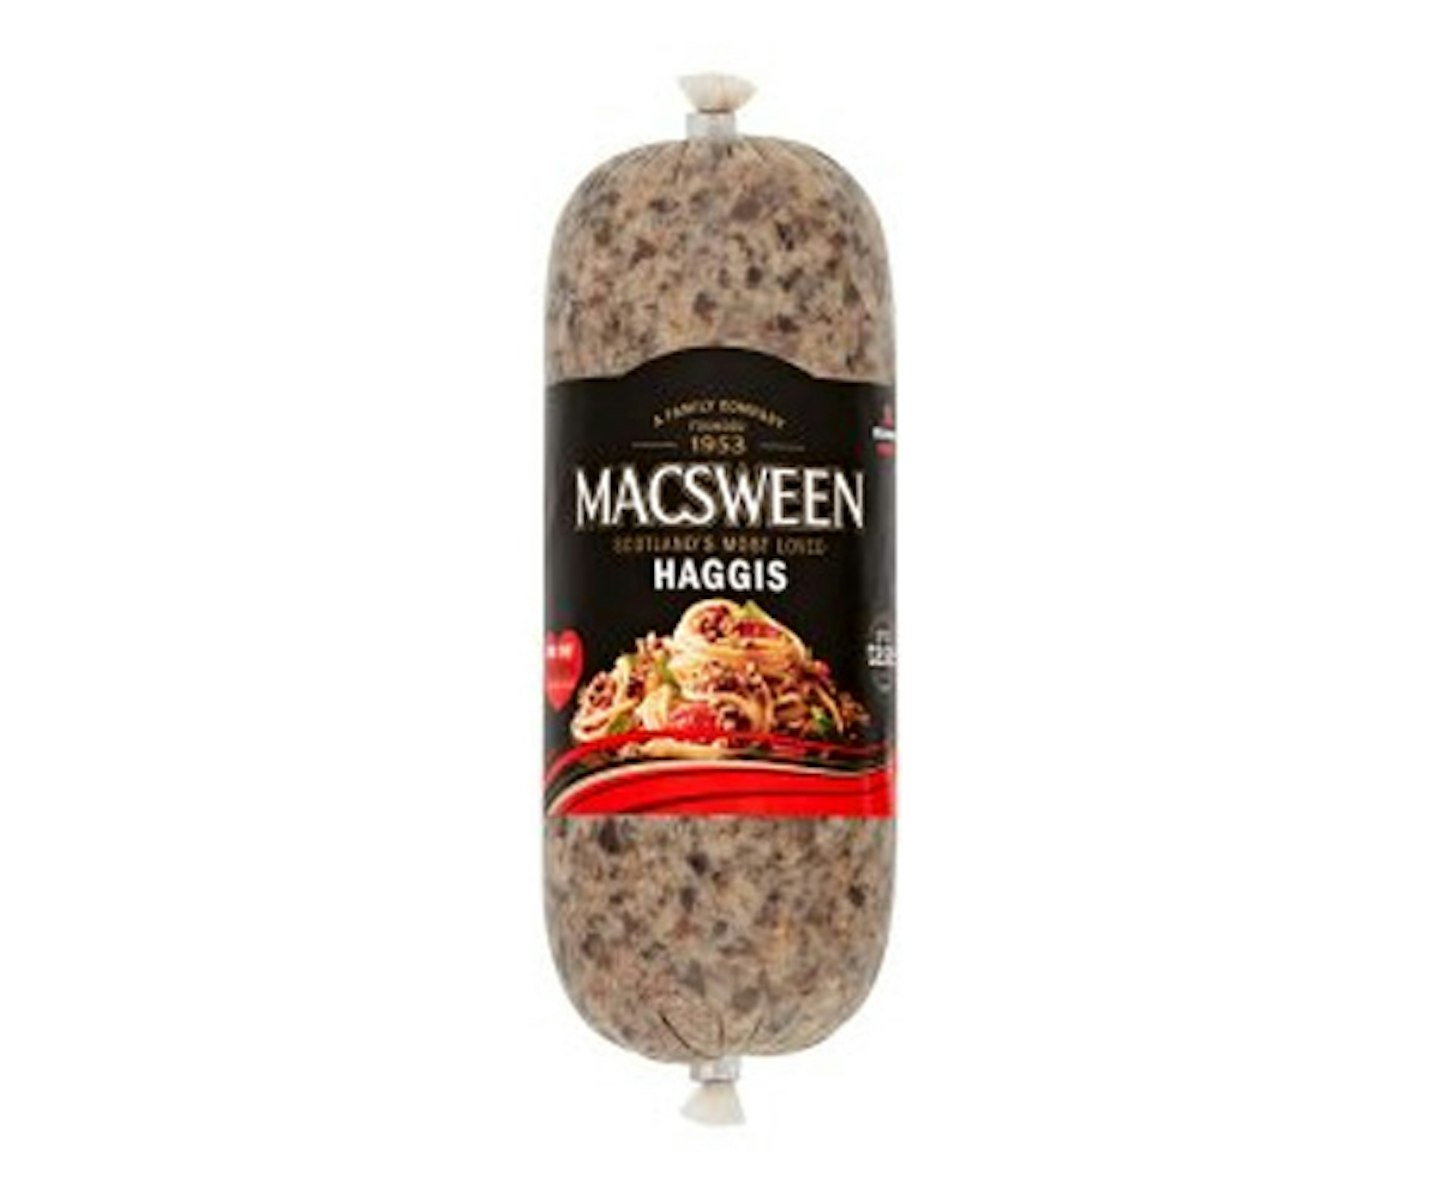 MacSween Haggis